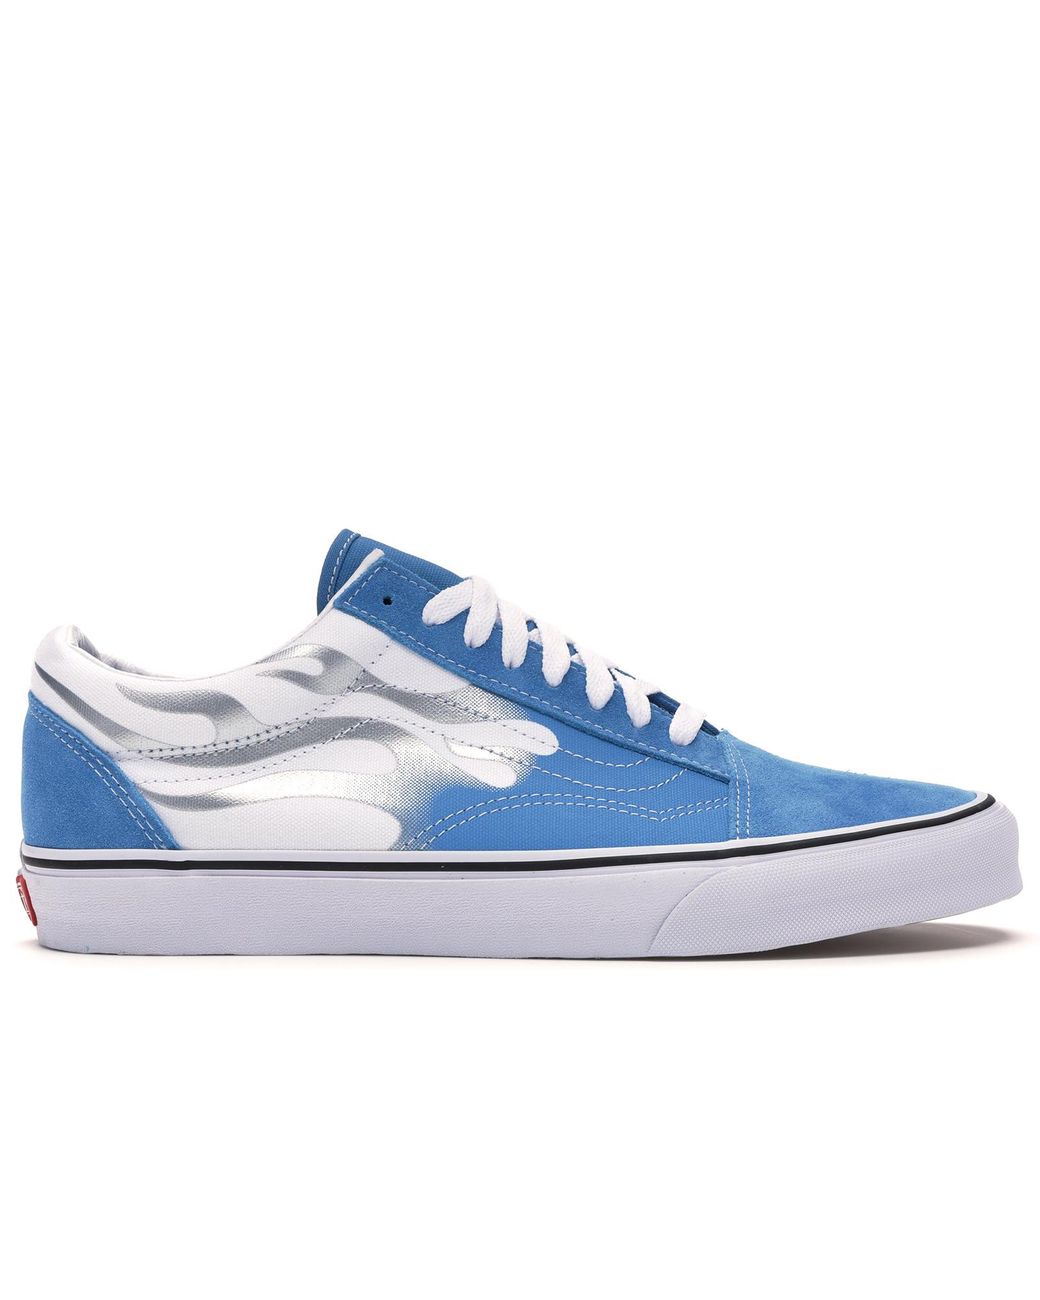 Vans Rubber Blue Neon Flame Old Skool Shoes for Men - Save 27% - Lyst